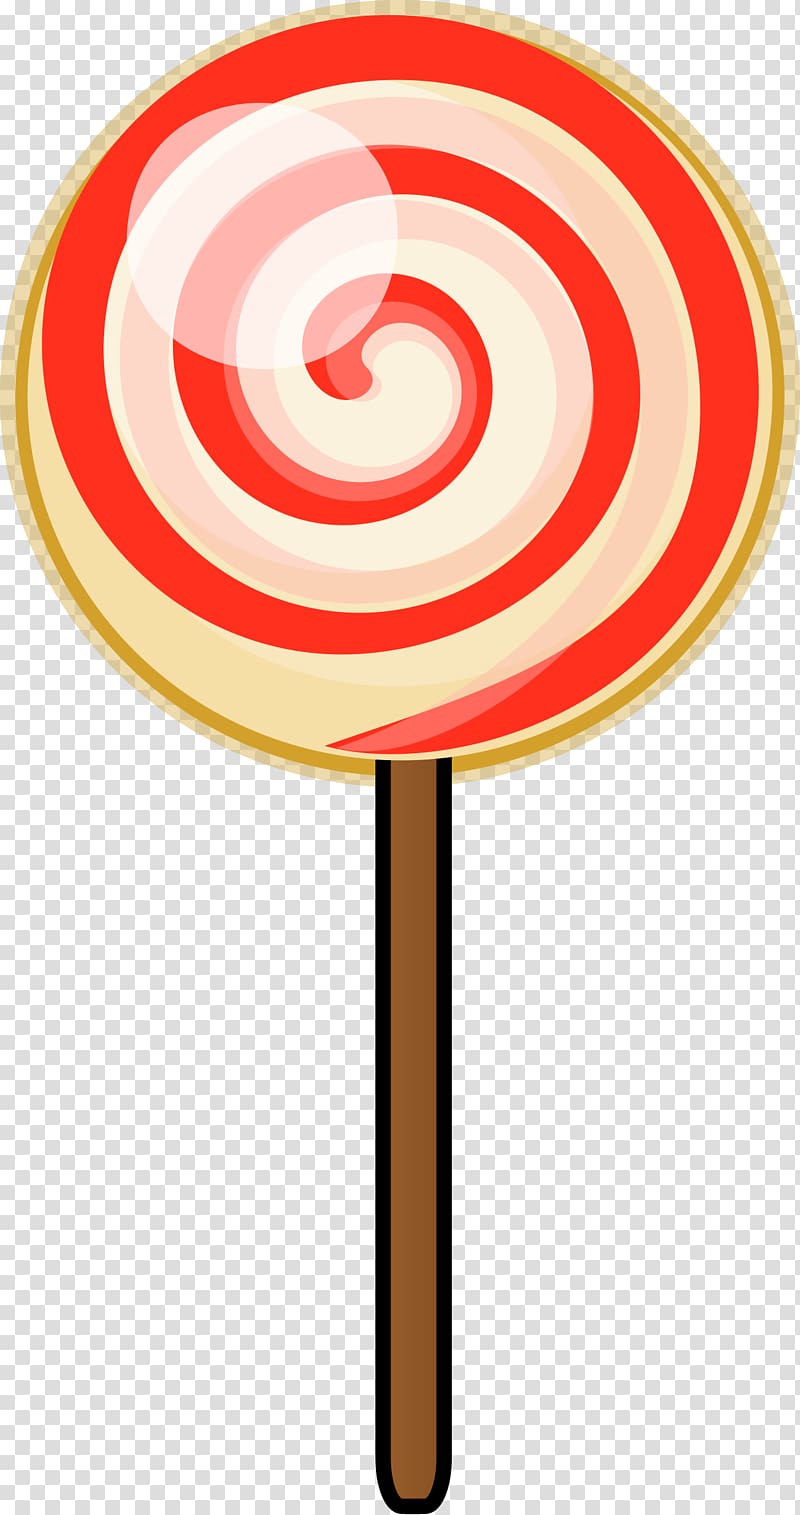 Lollipop Candy Crush Saga, Lollipop transparent background PNG clipart